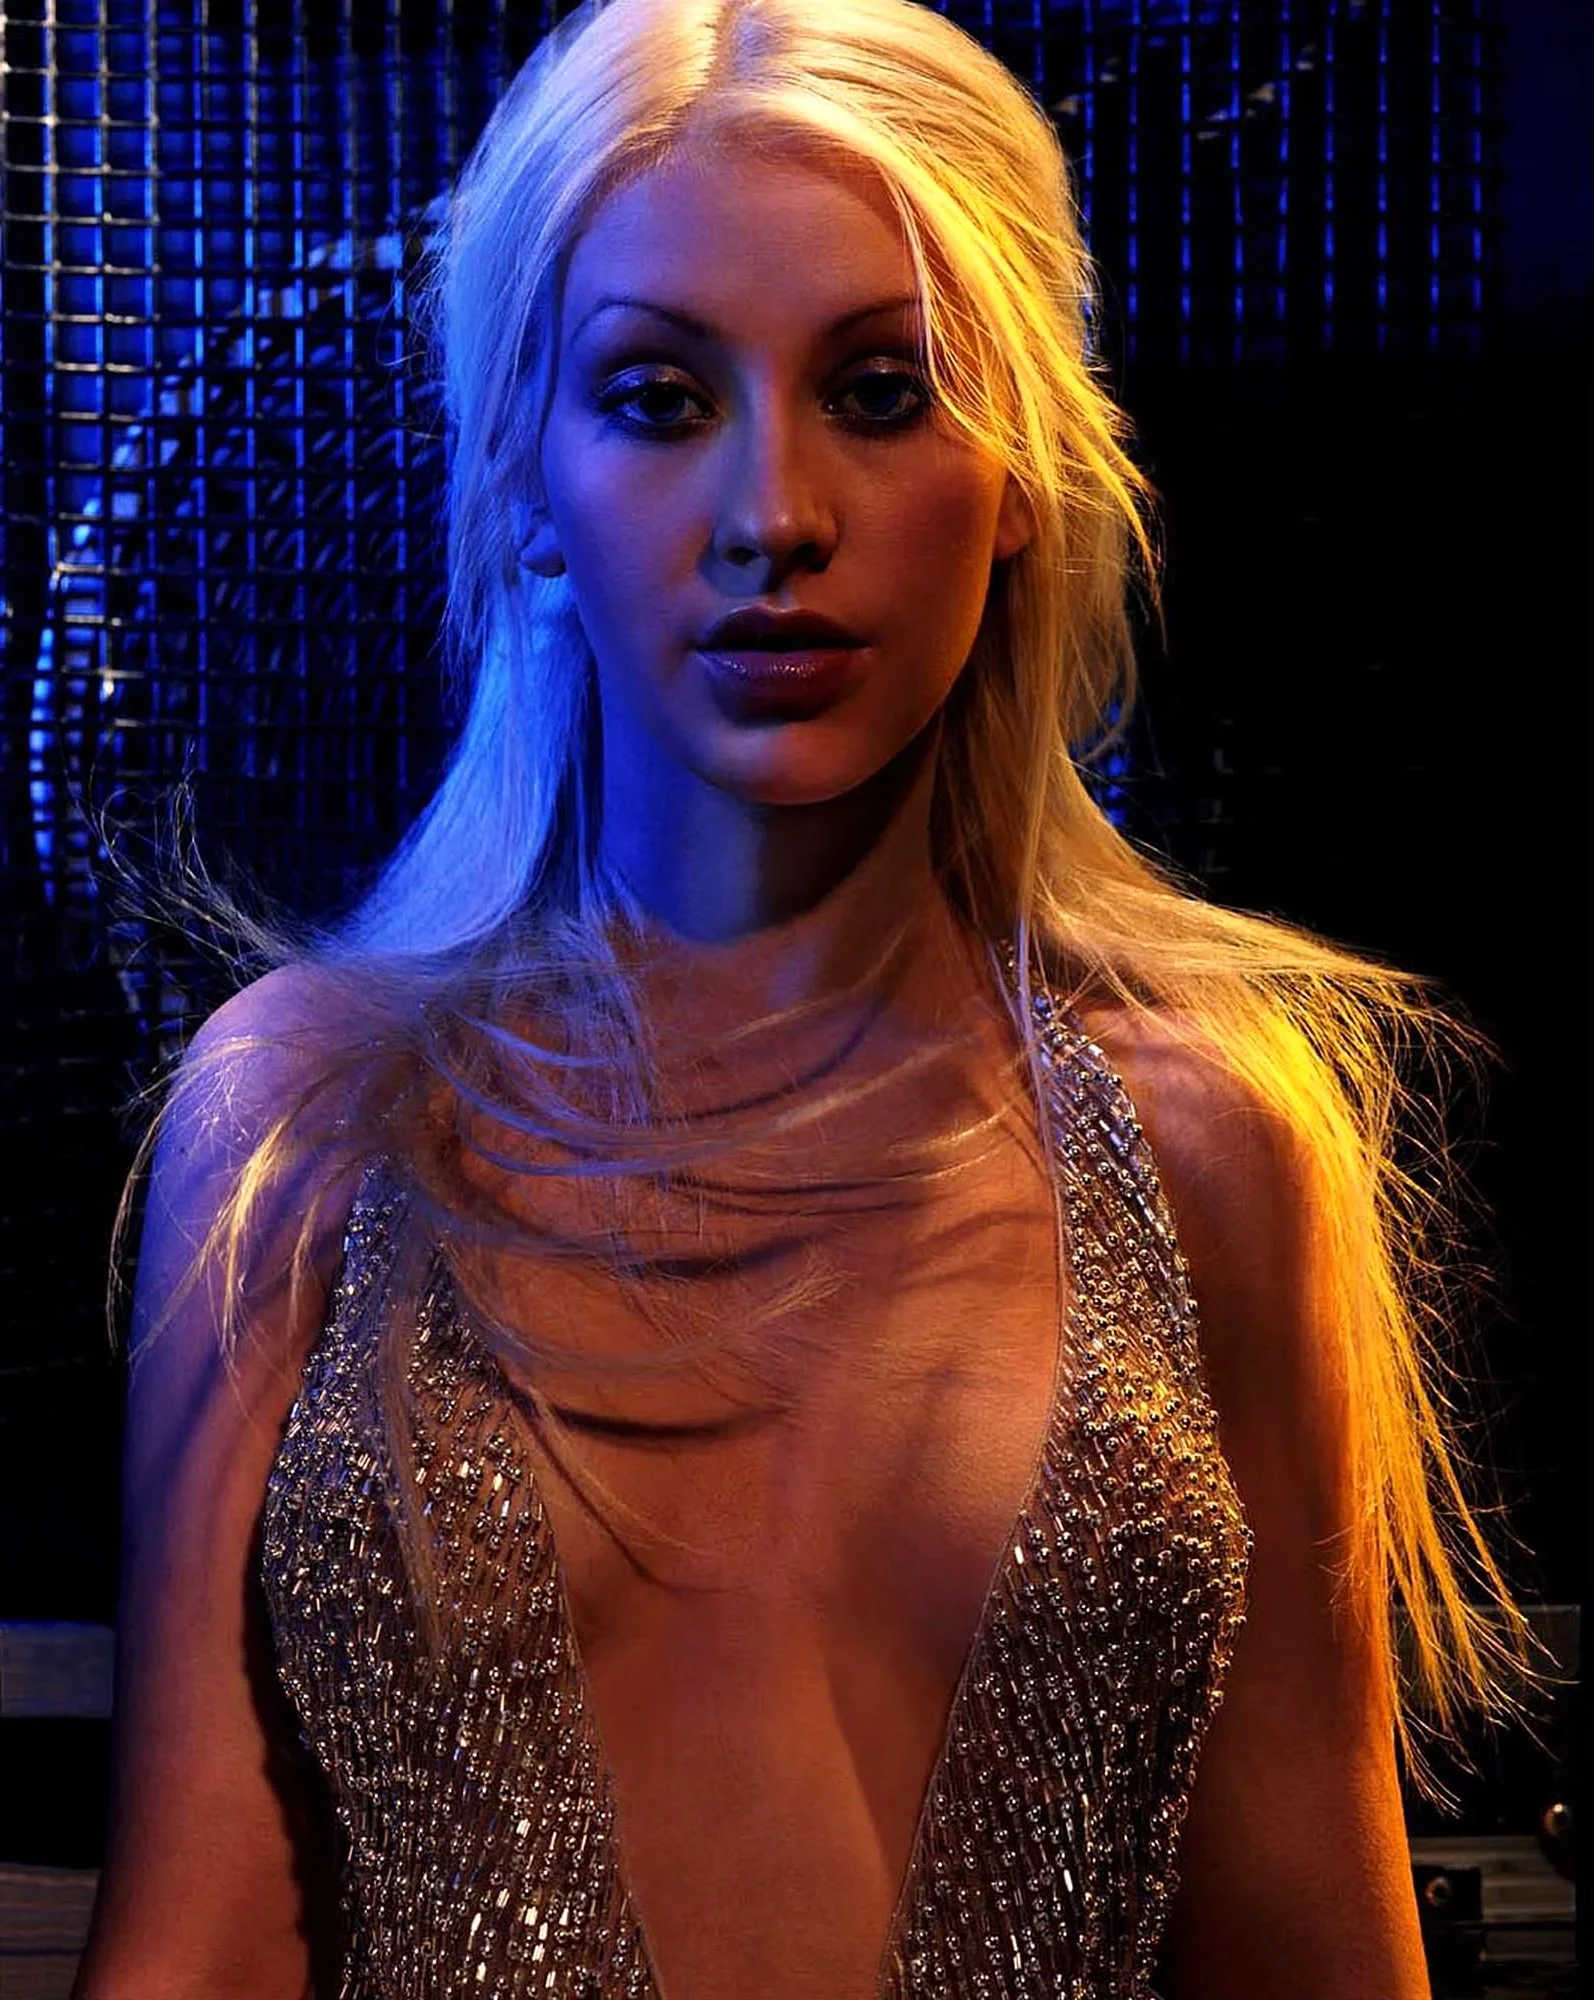 Christina Maria Aguilera 2011 Wallpaper